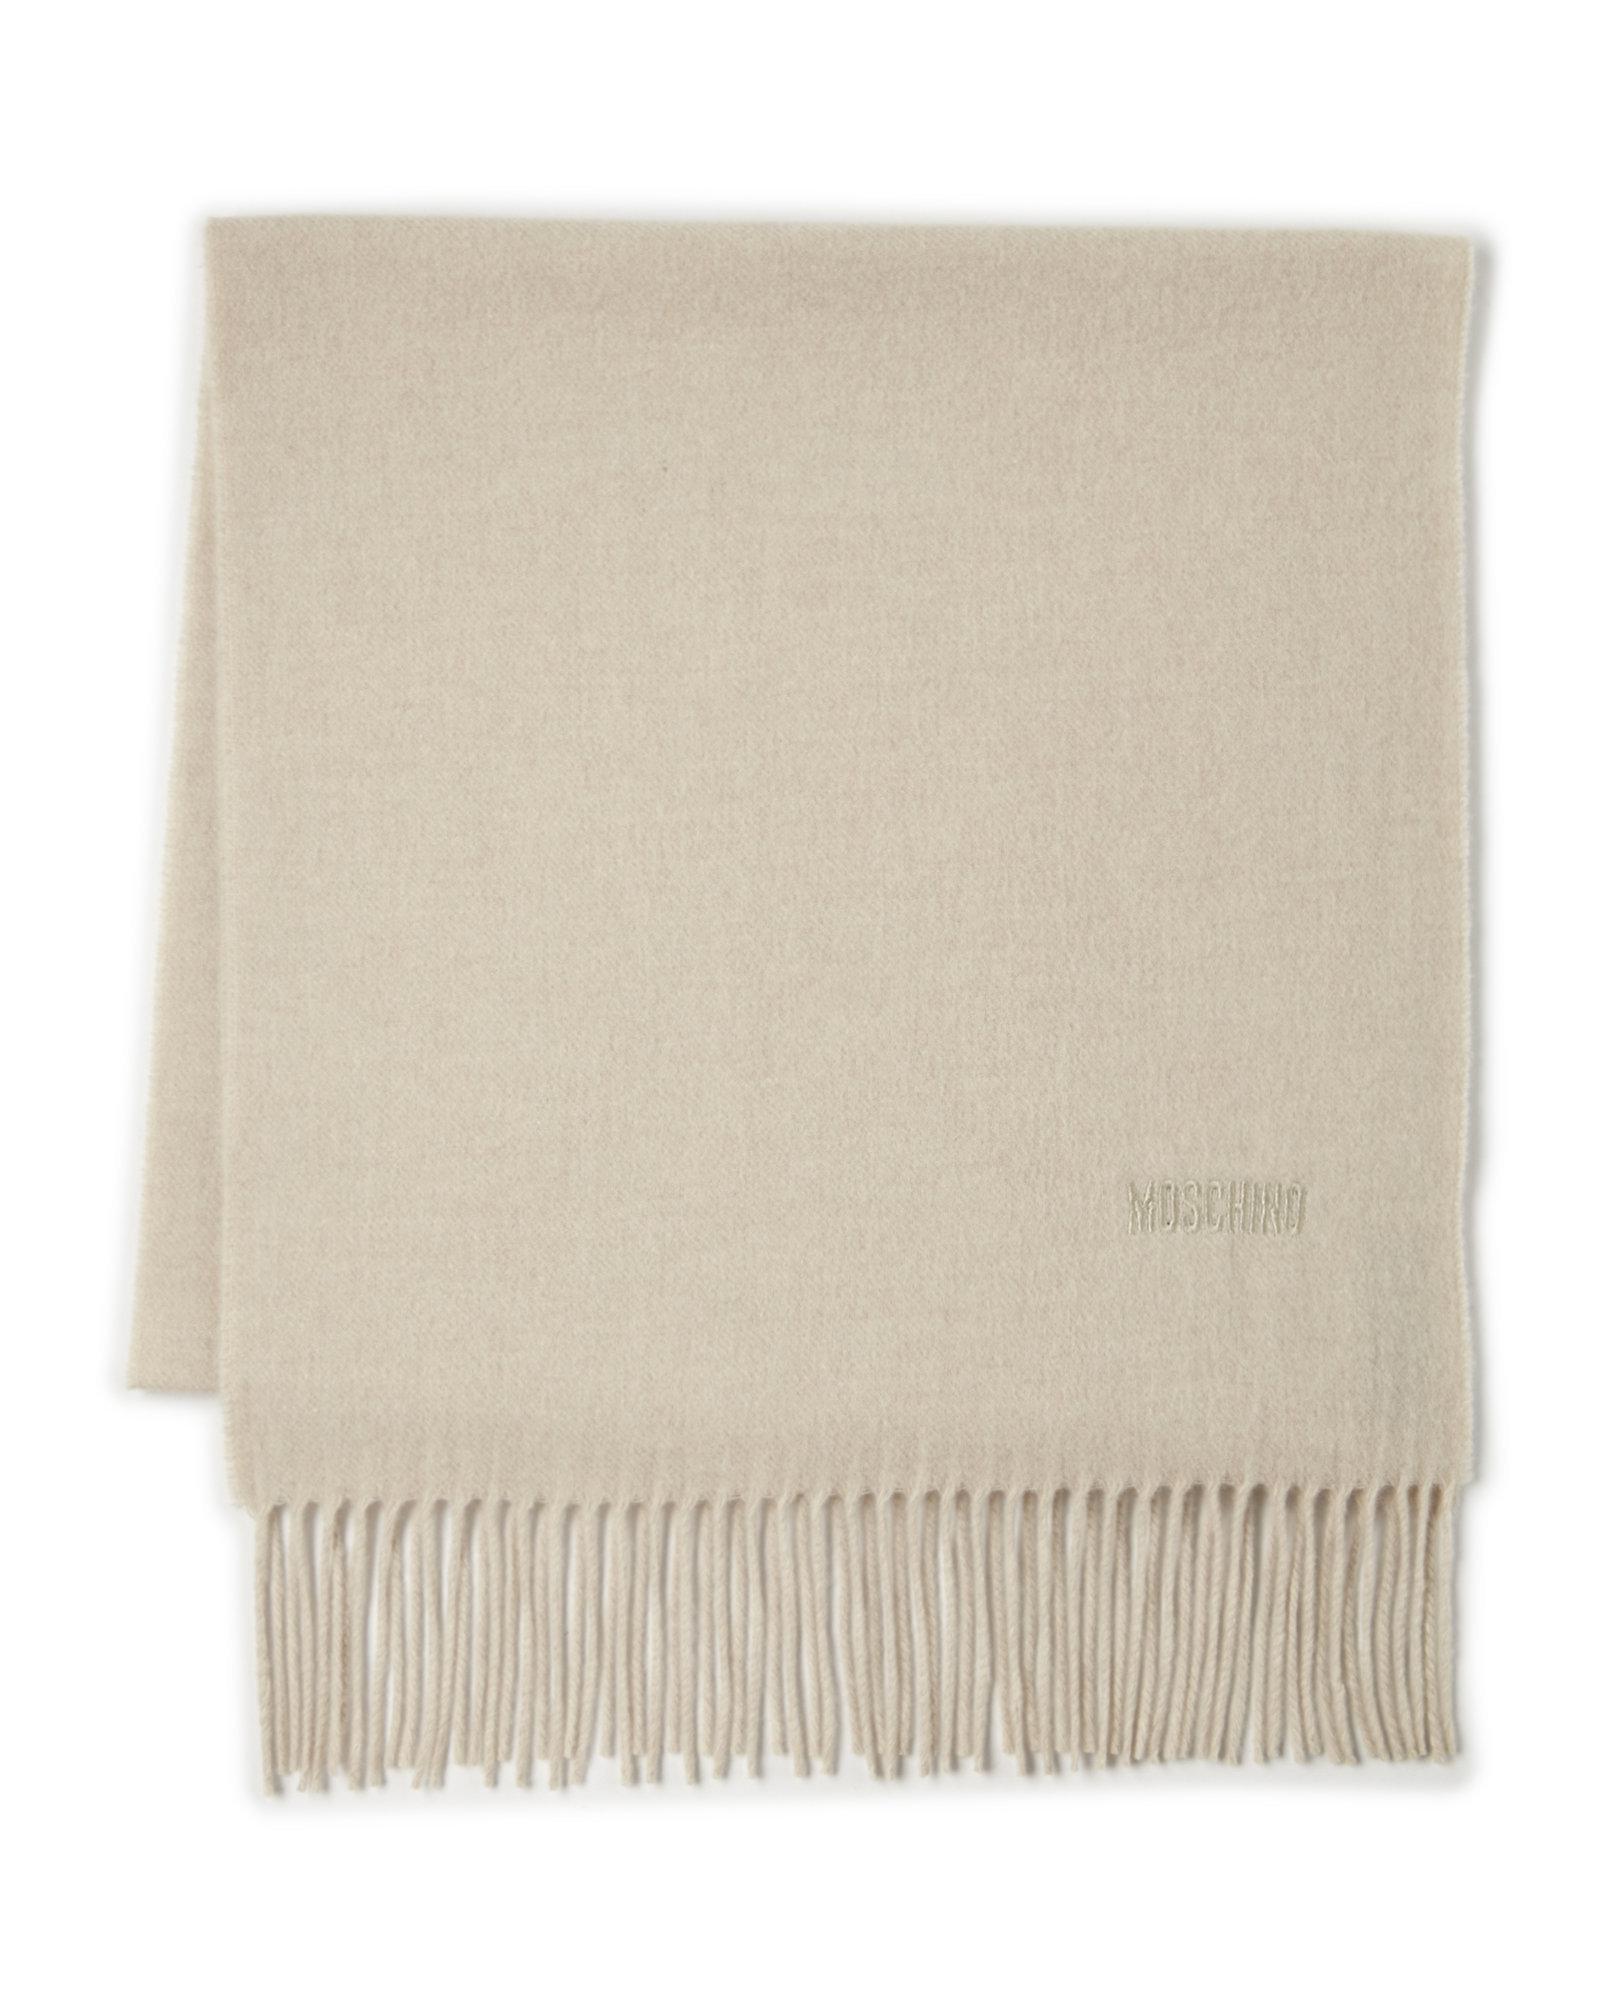 moschino scarf century 21 cheap online